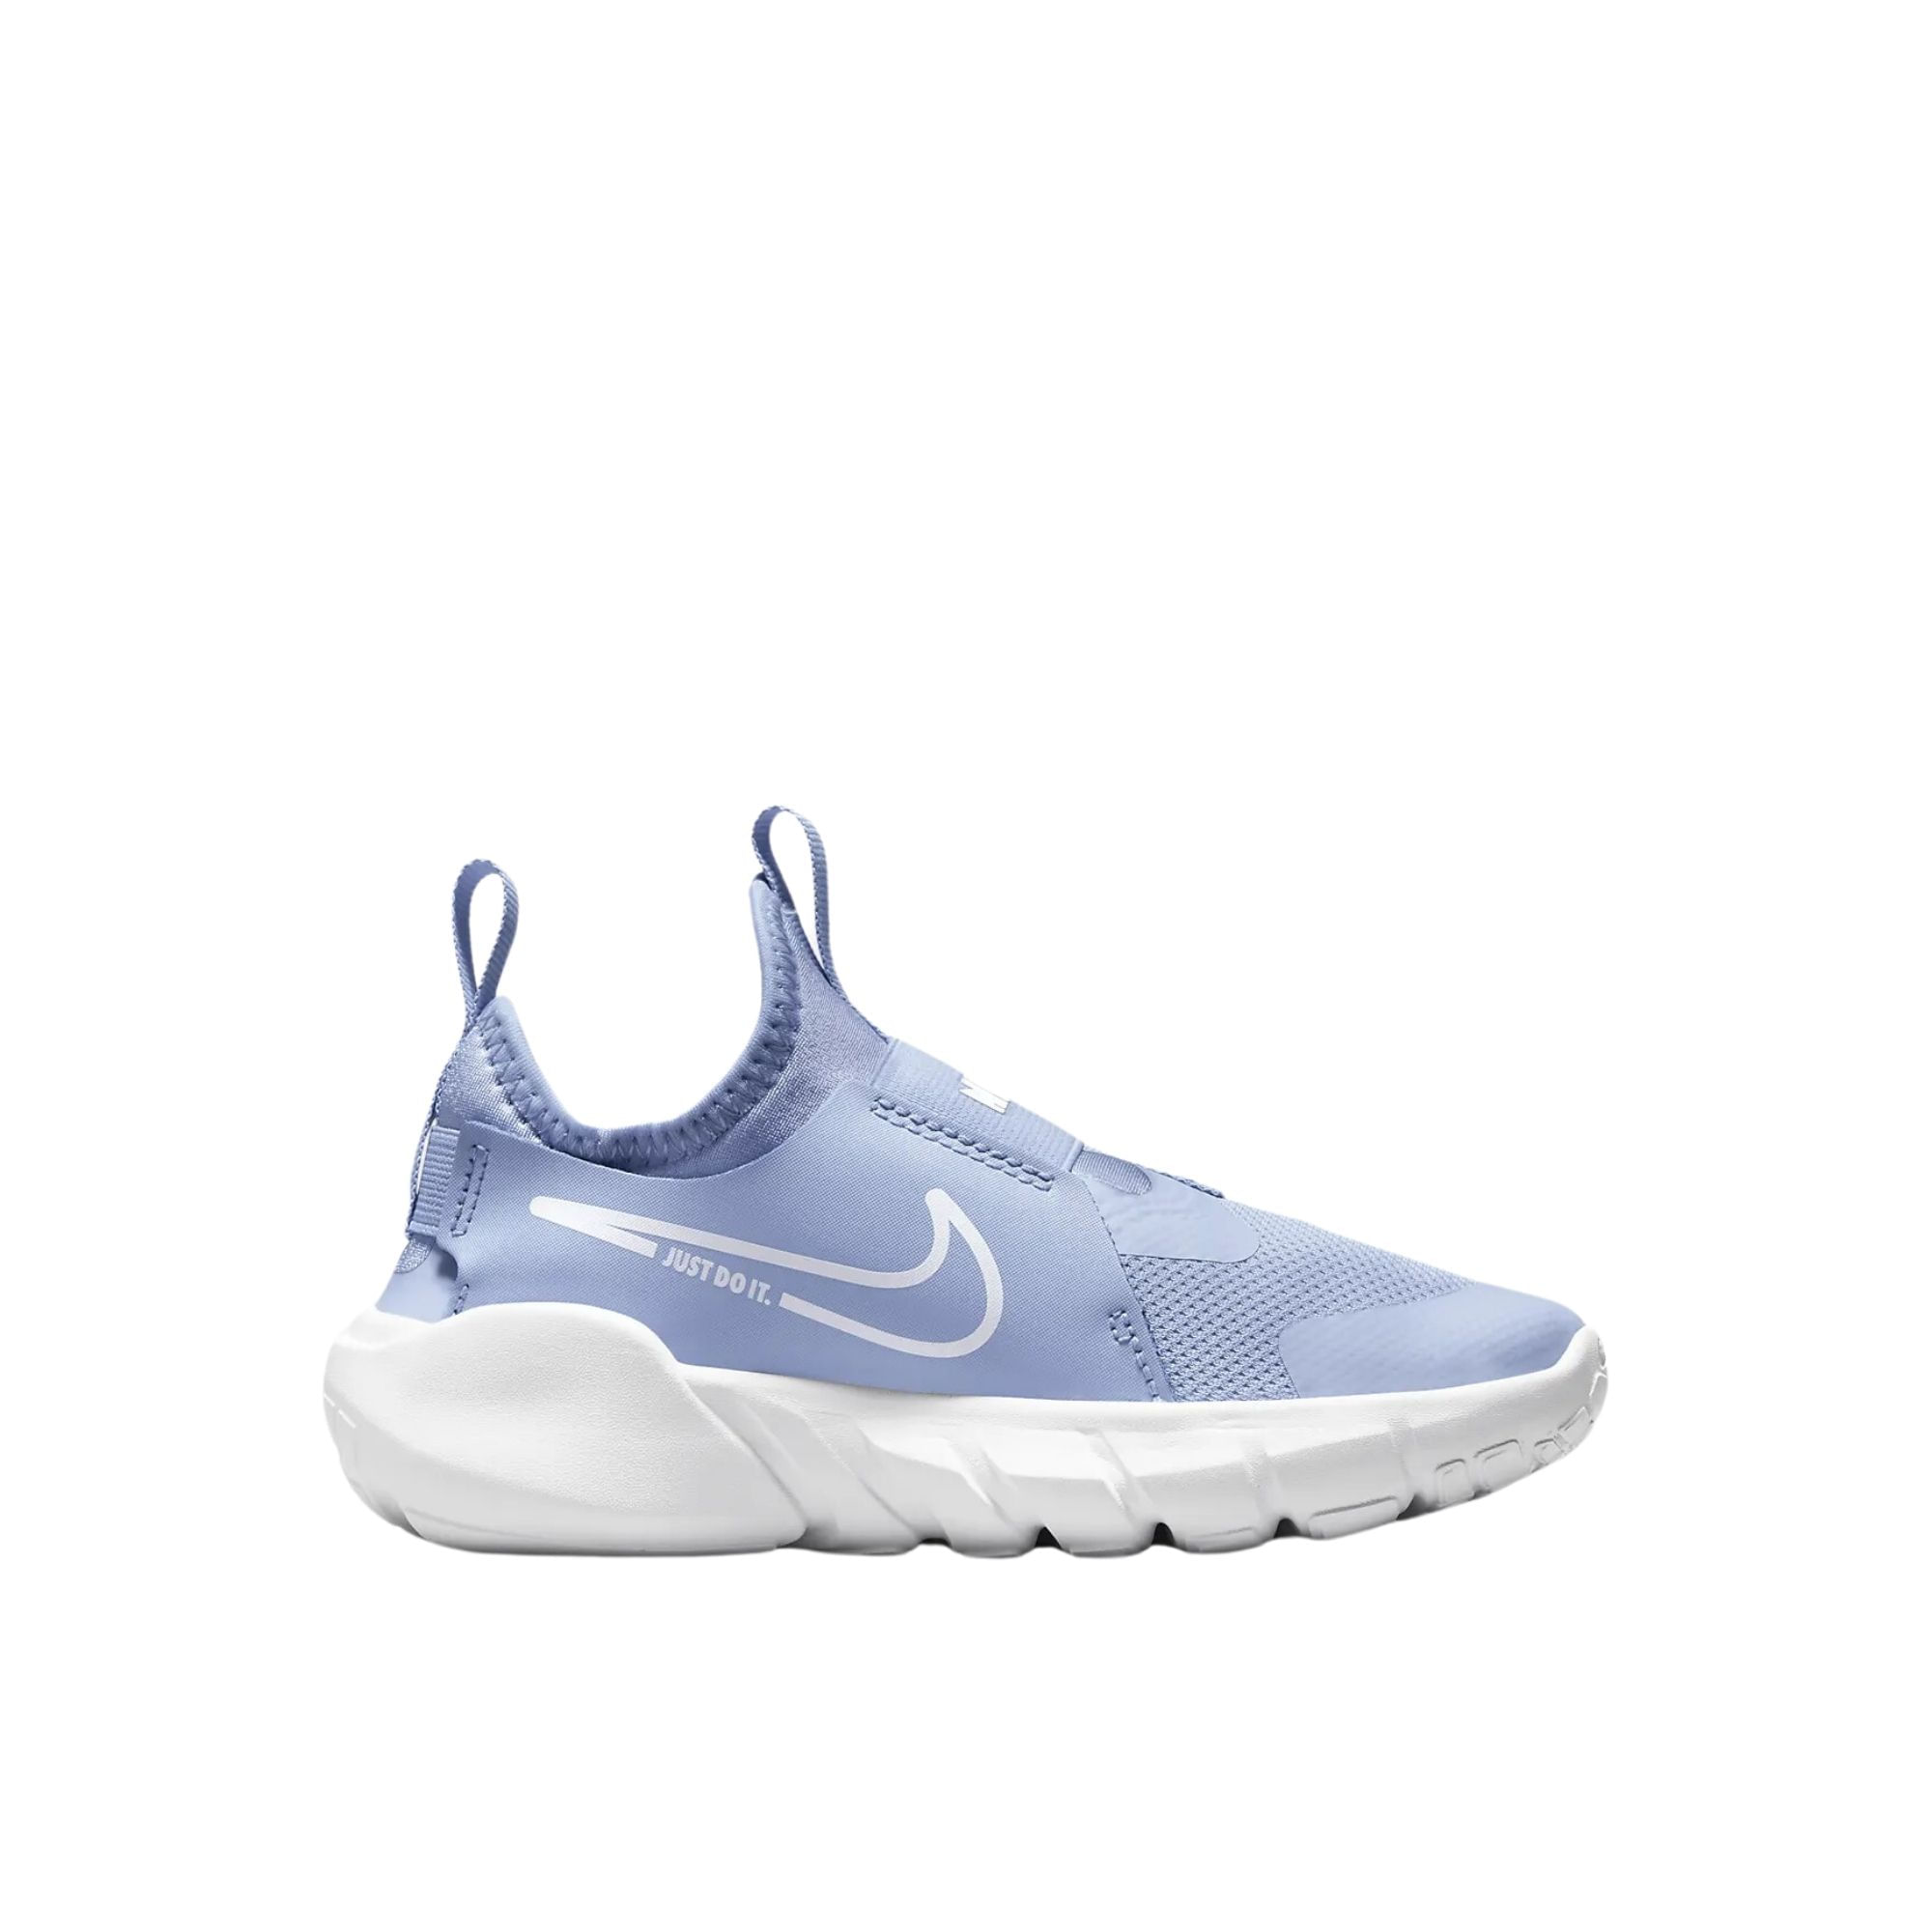 Tênis Nike Flex Runner 2 Psv Infantil - Azul Claro